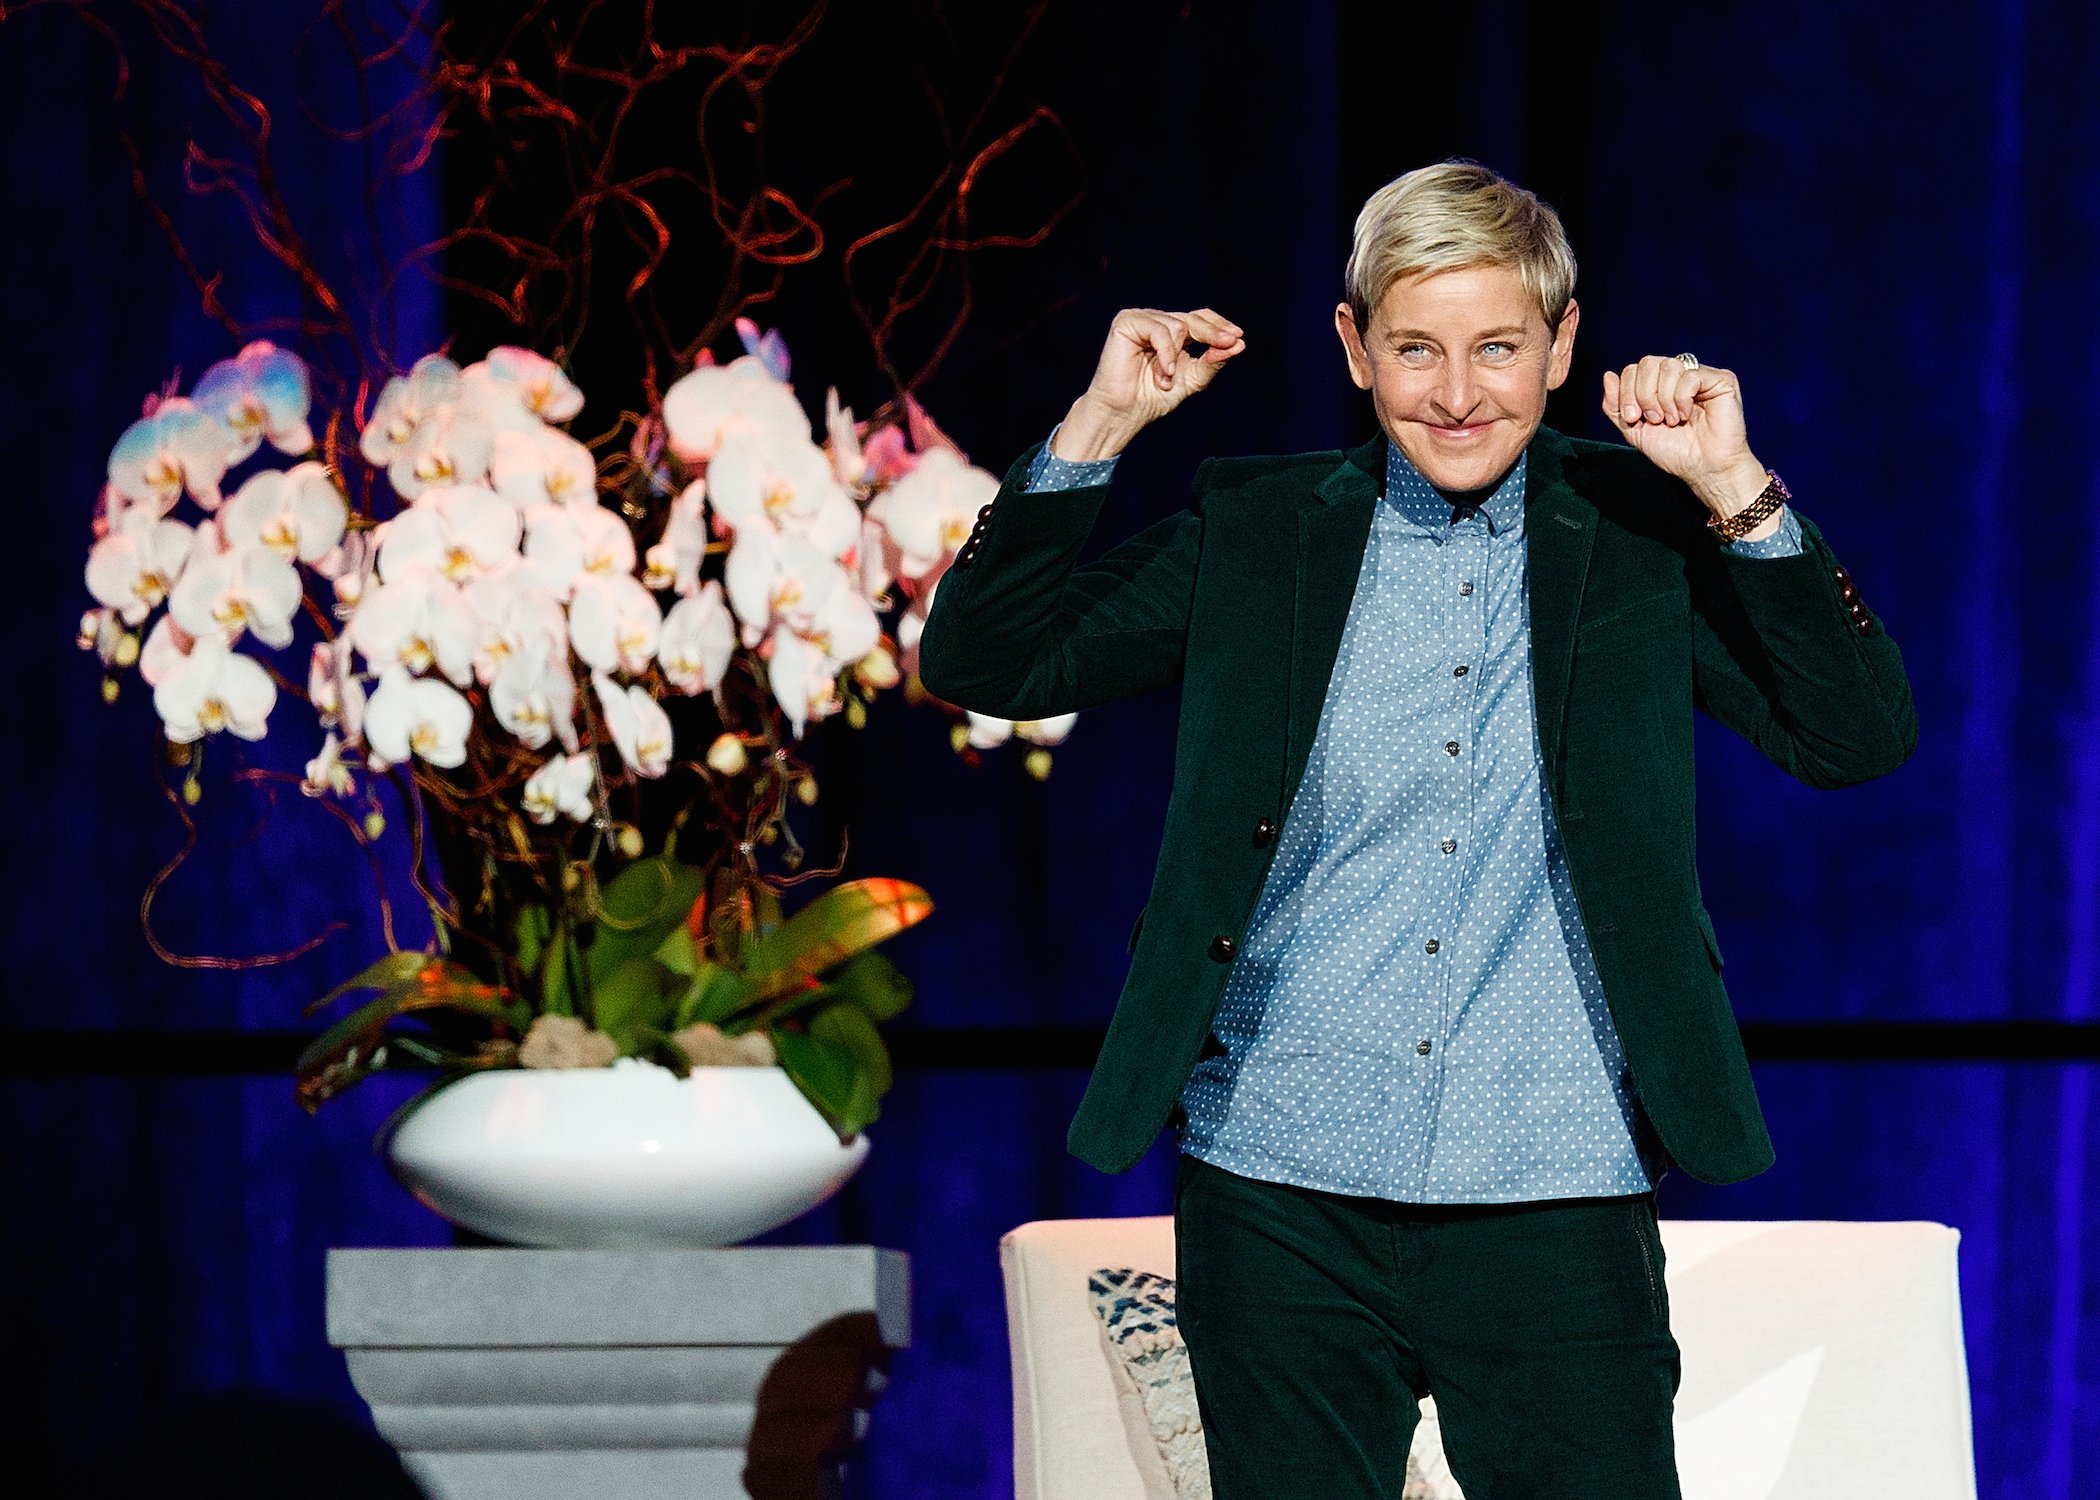 Ellen DeGeneres speaks on stage during 'A Conversation With Ellen DeGeneres' at Rogers Arena